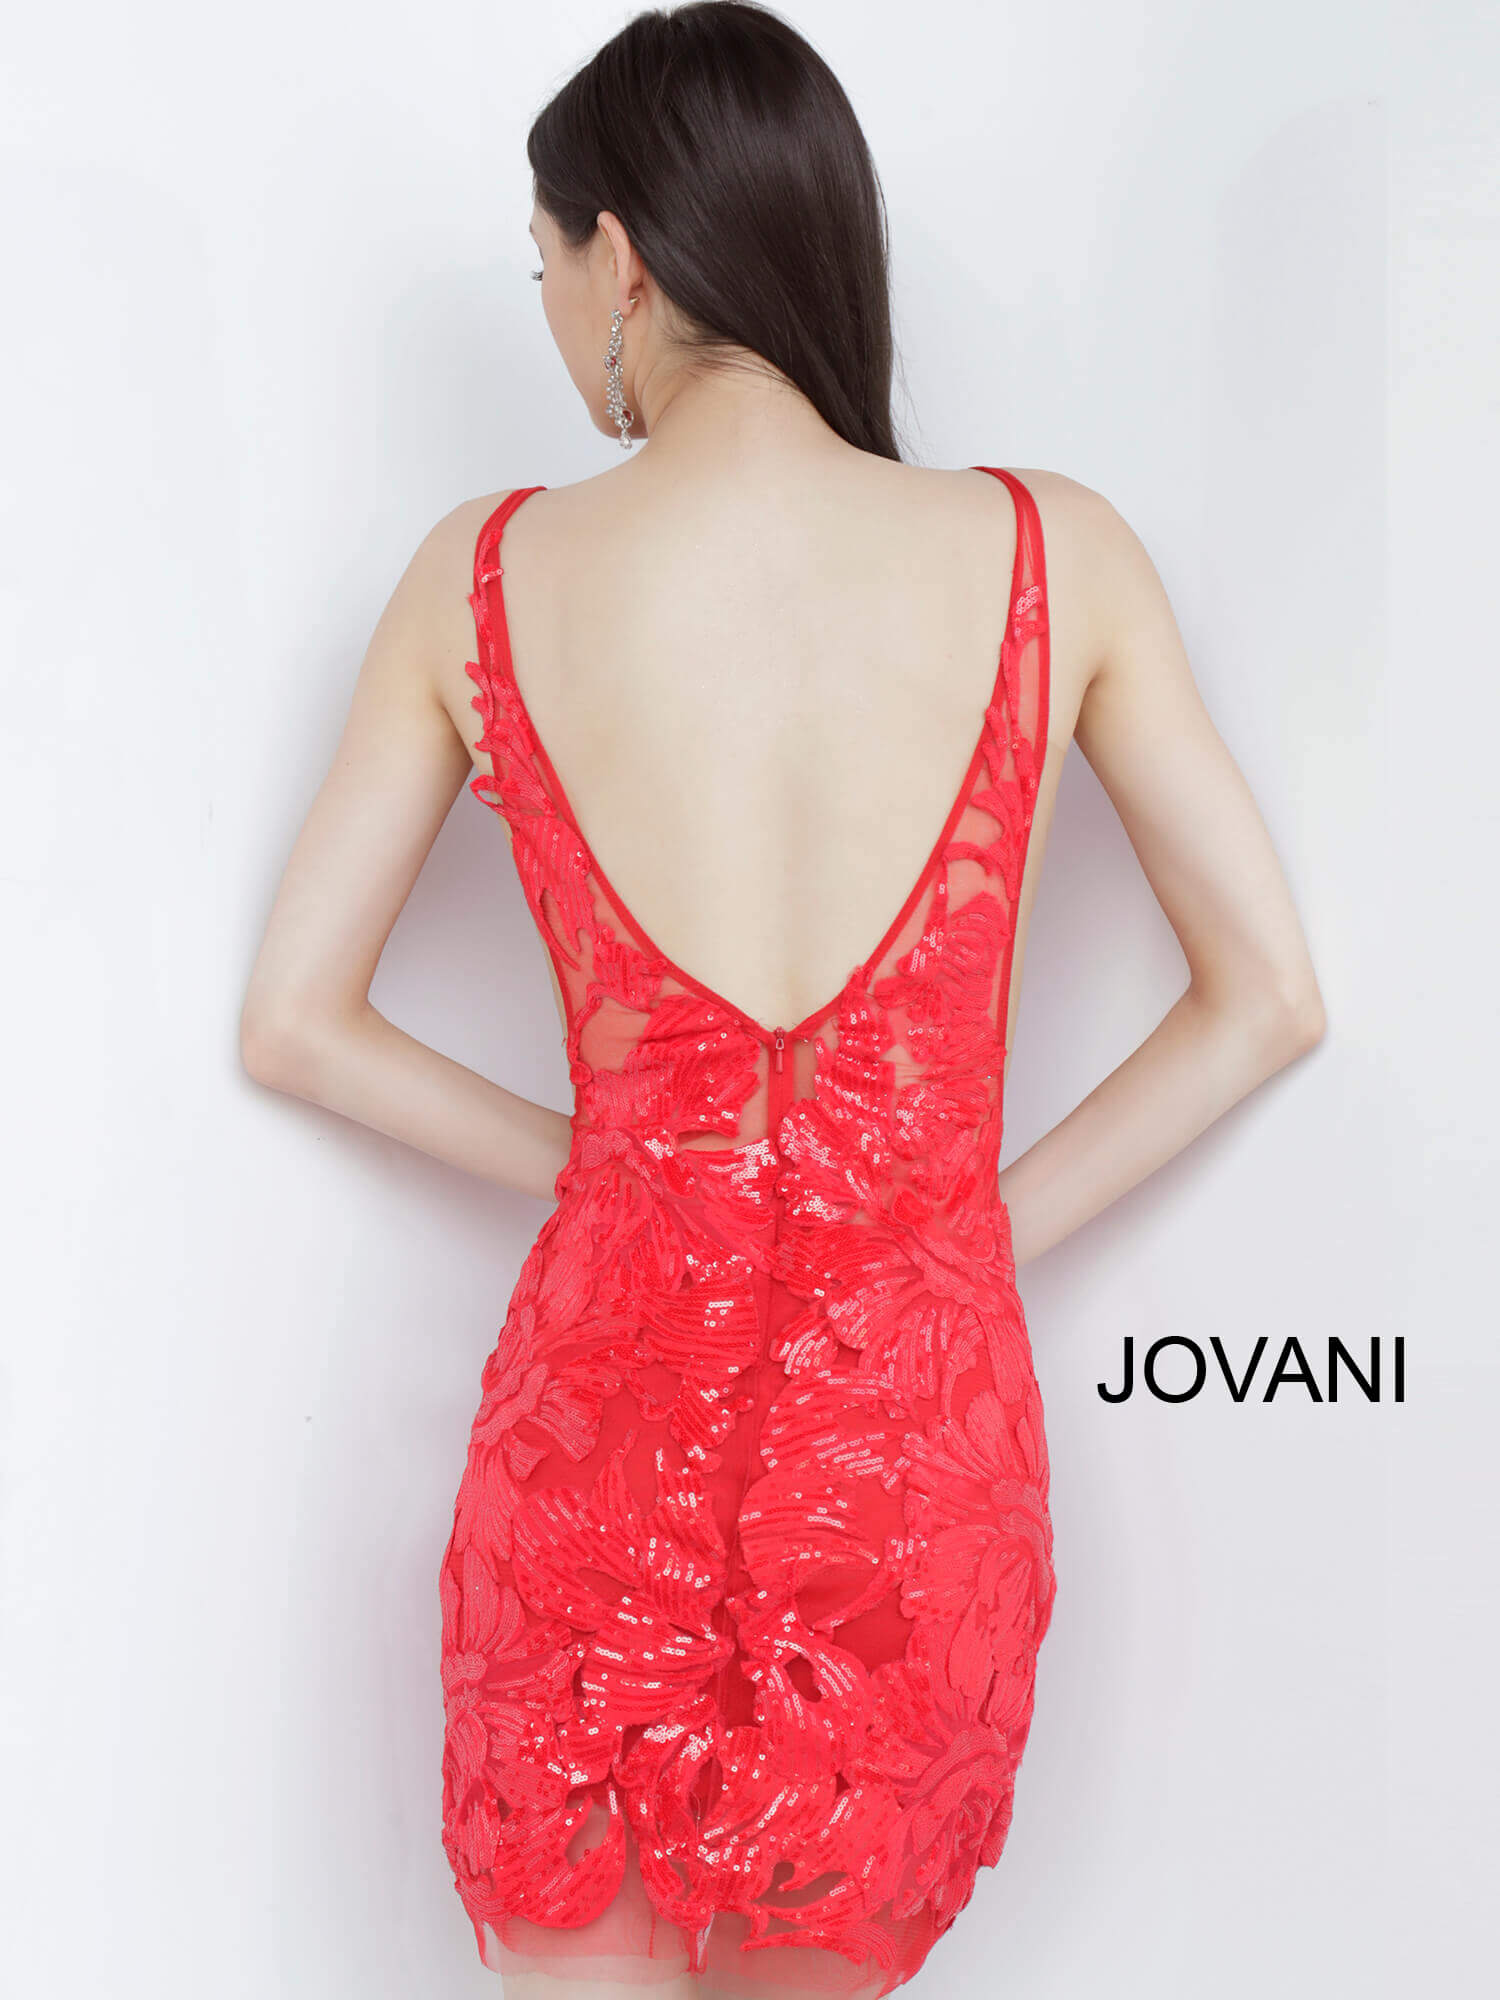 Jovani 4552 Red Embellished Fitted Cocktail Dress